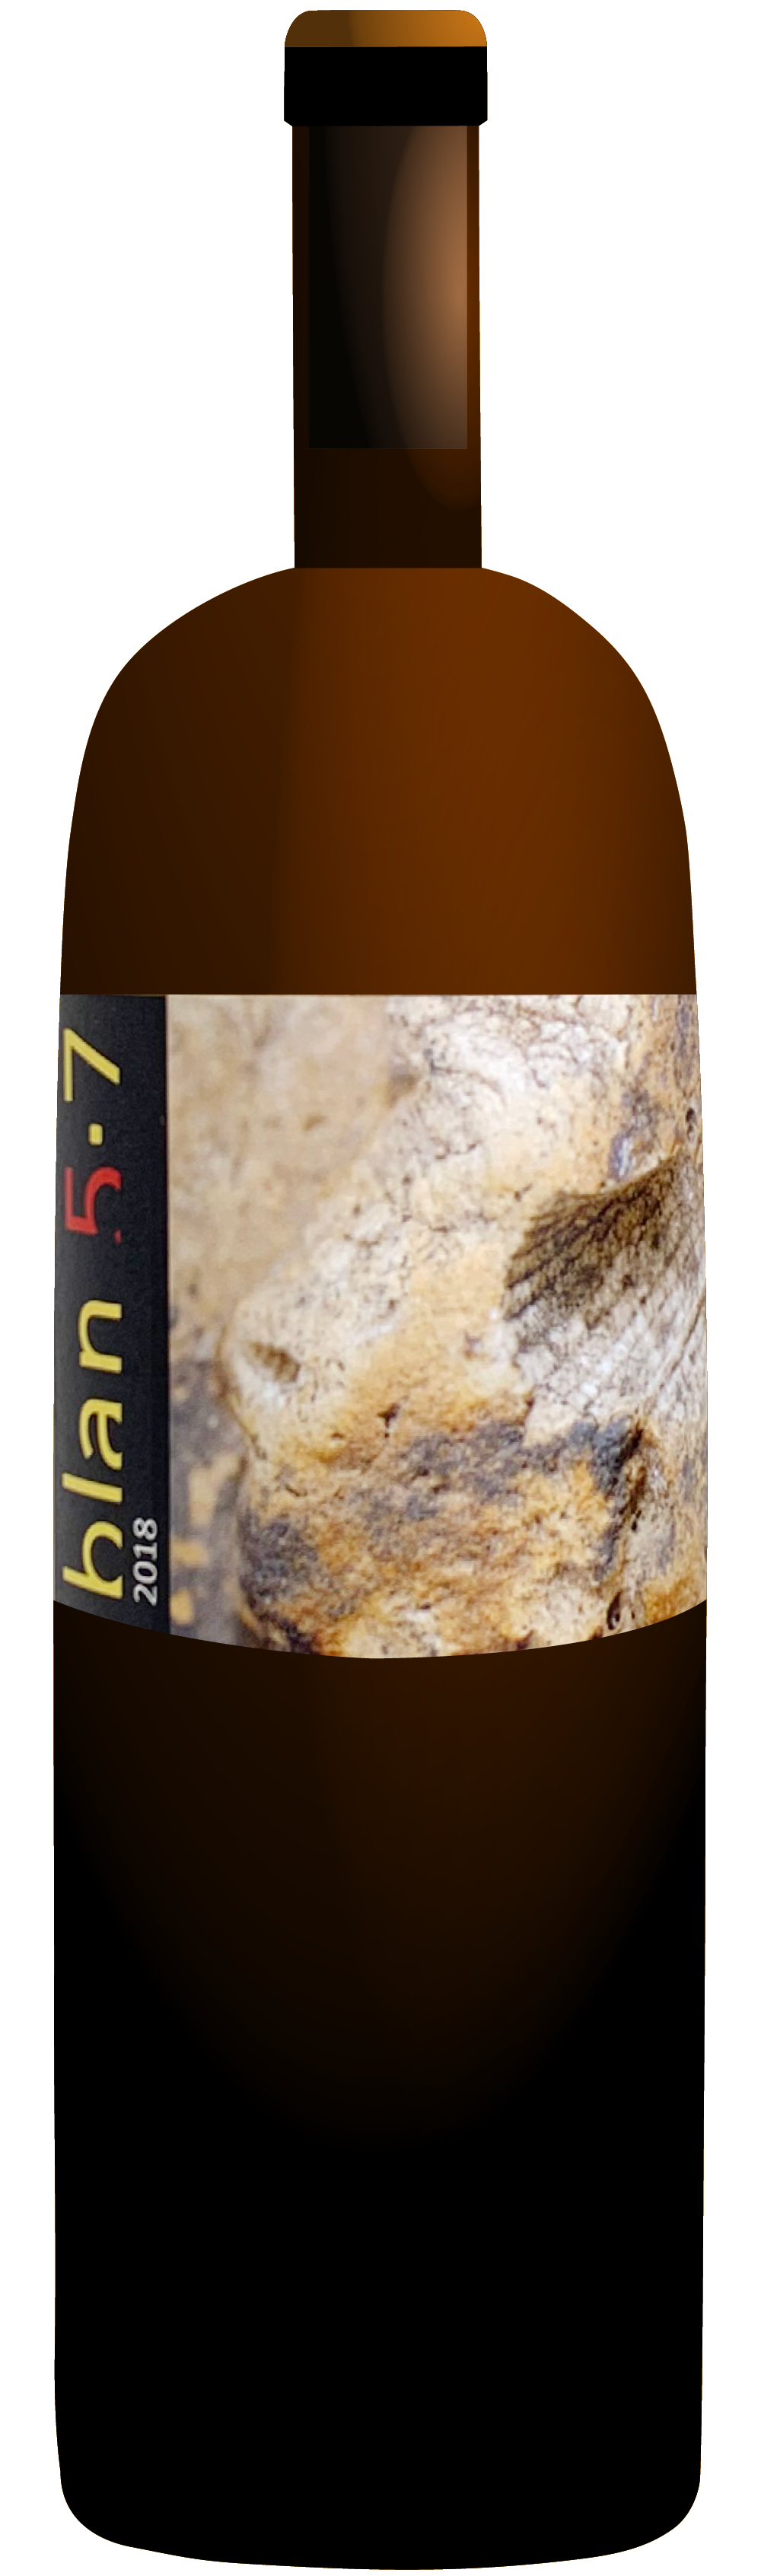 the natural wine company club july 2020 spain jordi llorens blan 5 7